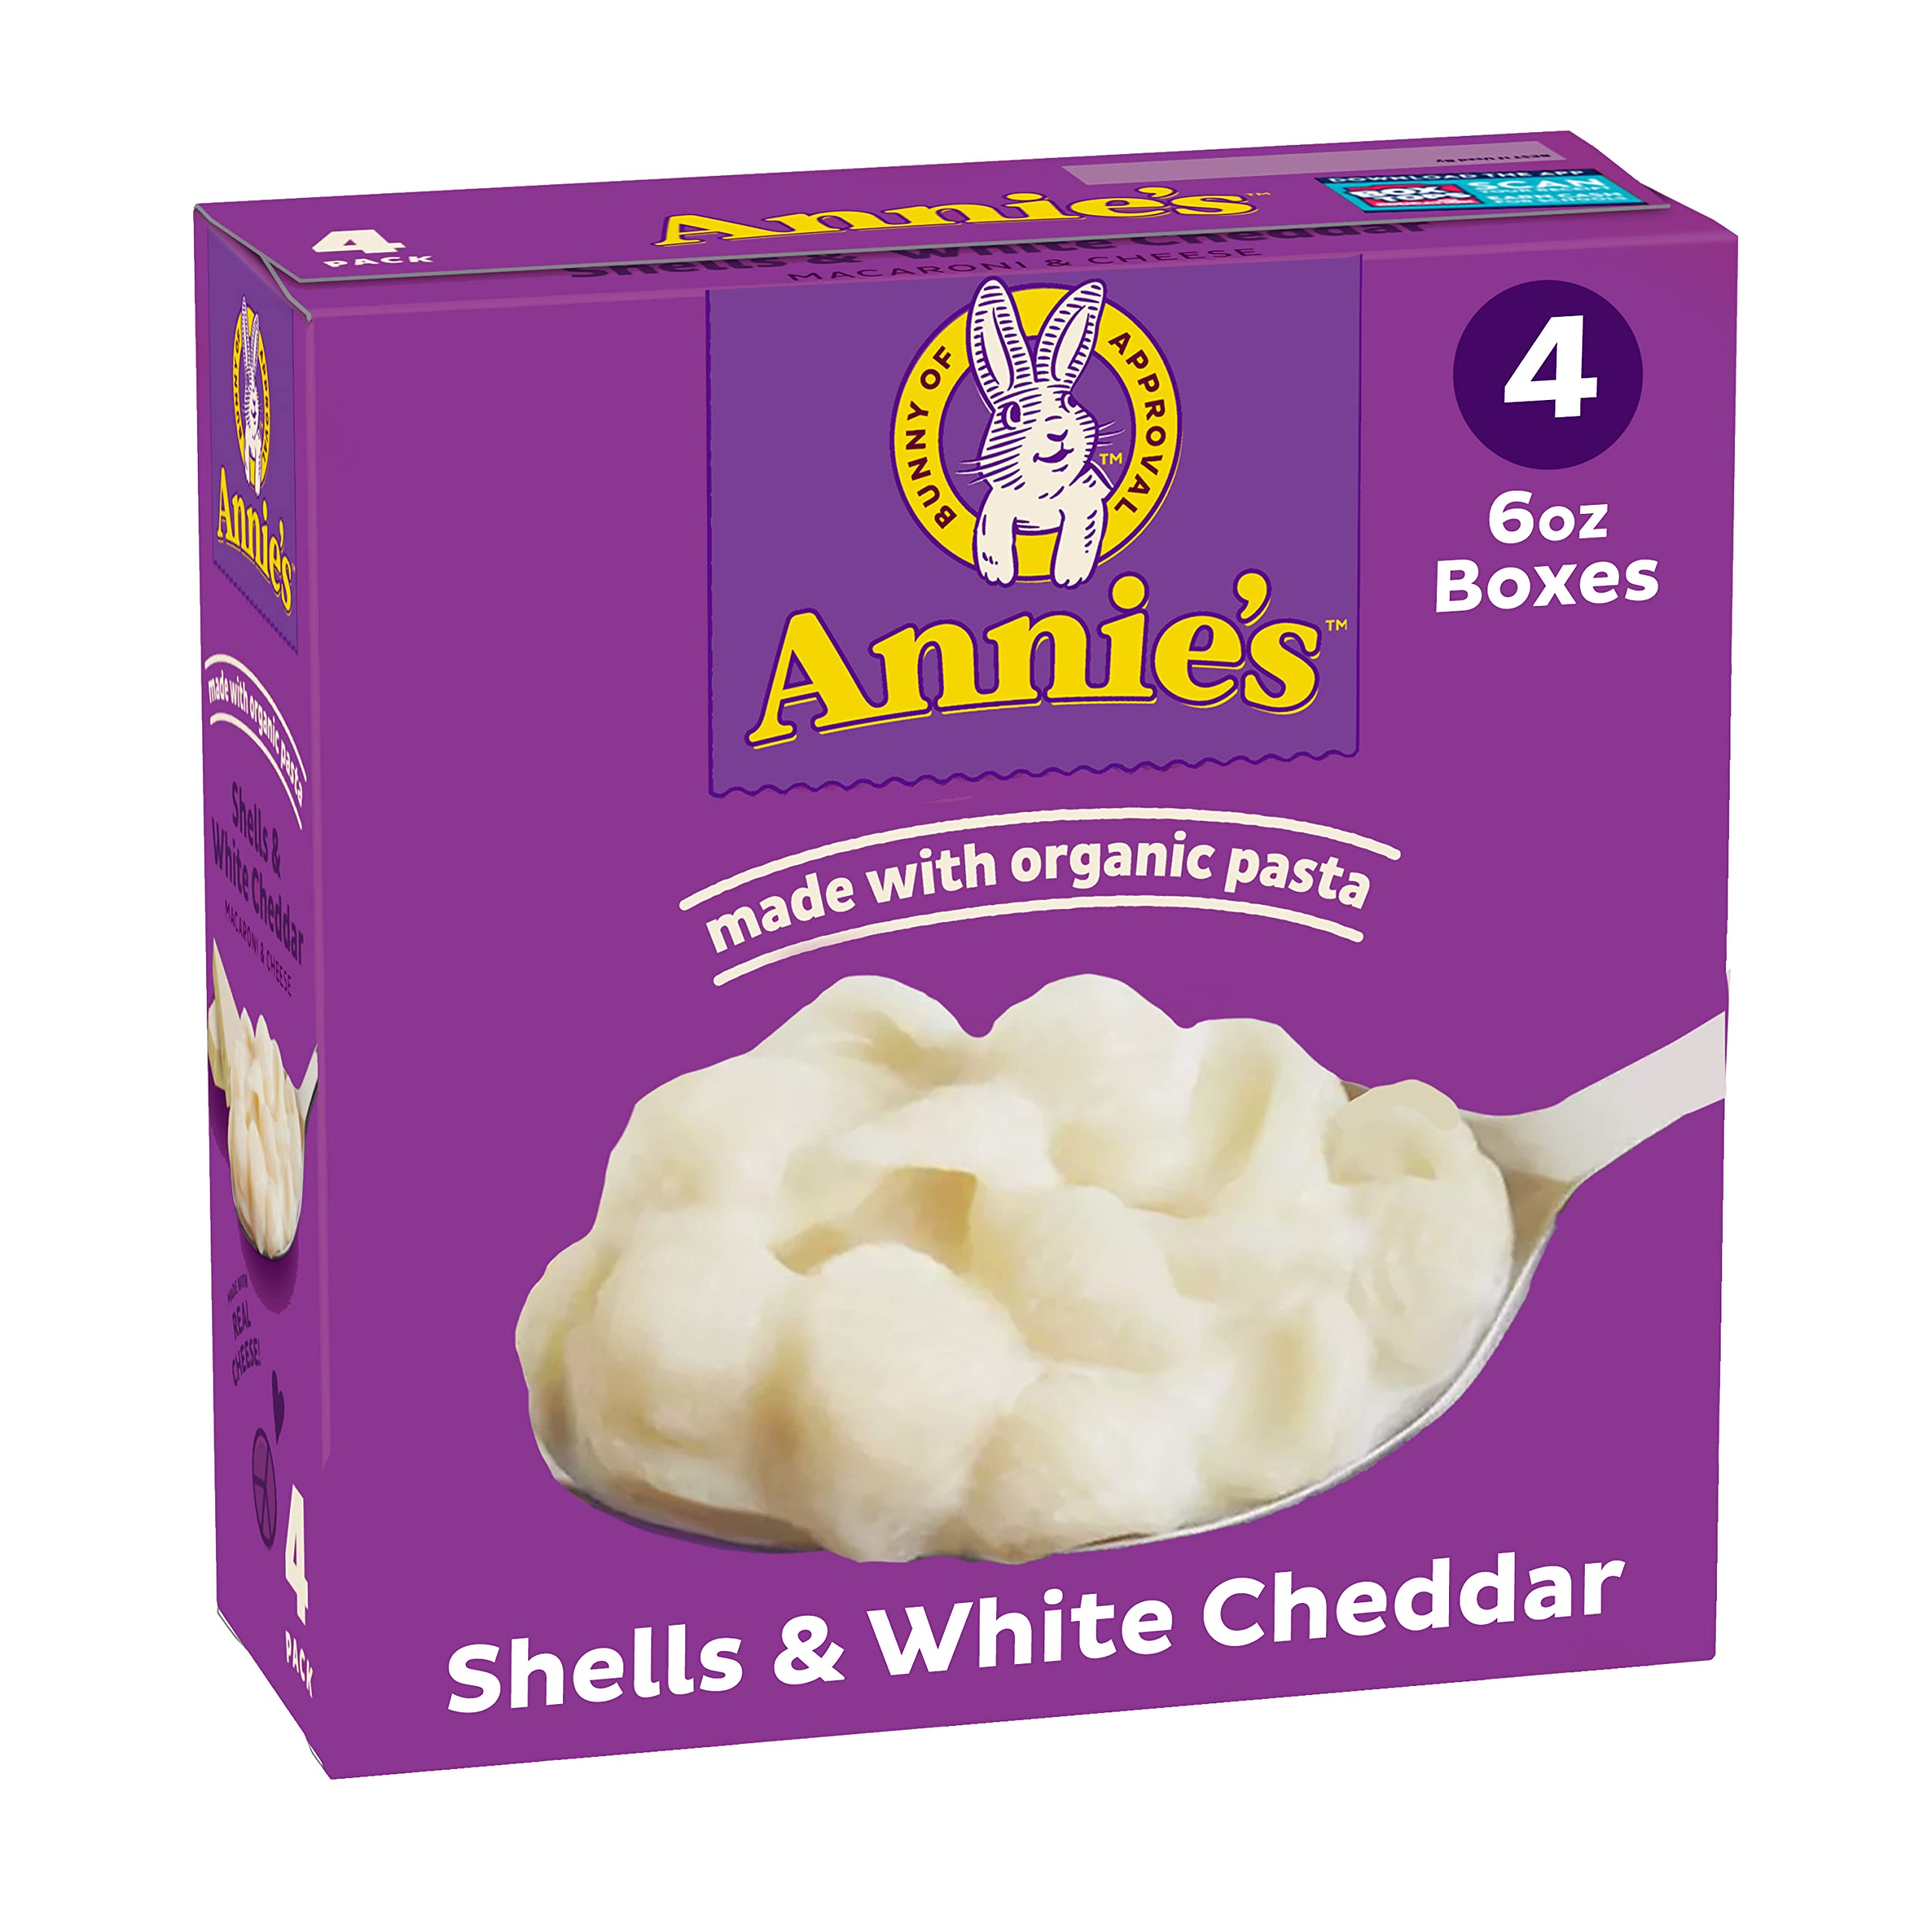 Annie's Organic Mac & Cheese Variety Pack (6 Ounce box, 12 Count